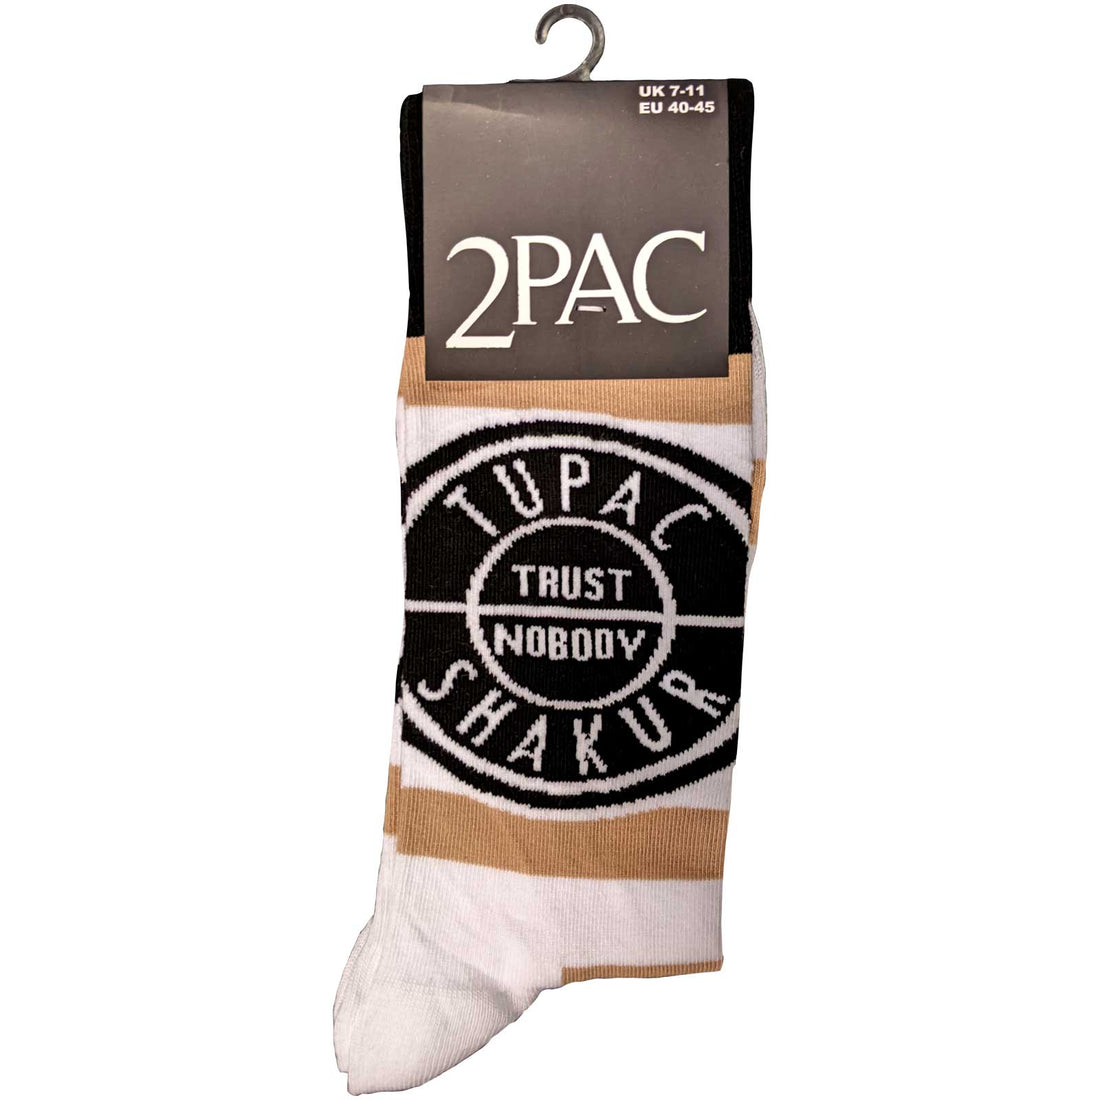 Tupac Ankle Socks: Trust Nobody (Size 8 - 12)